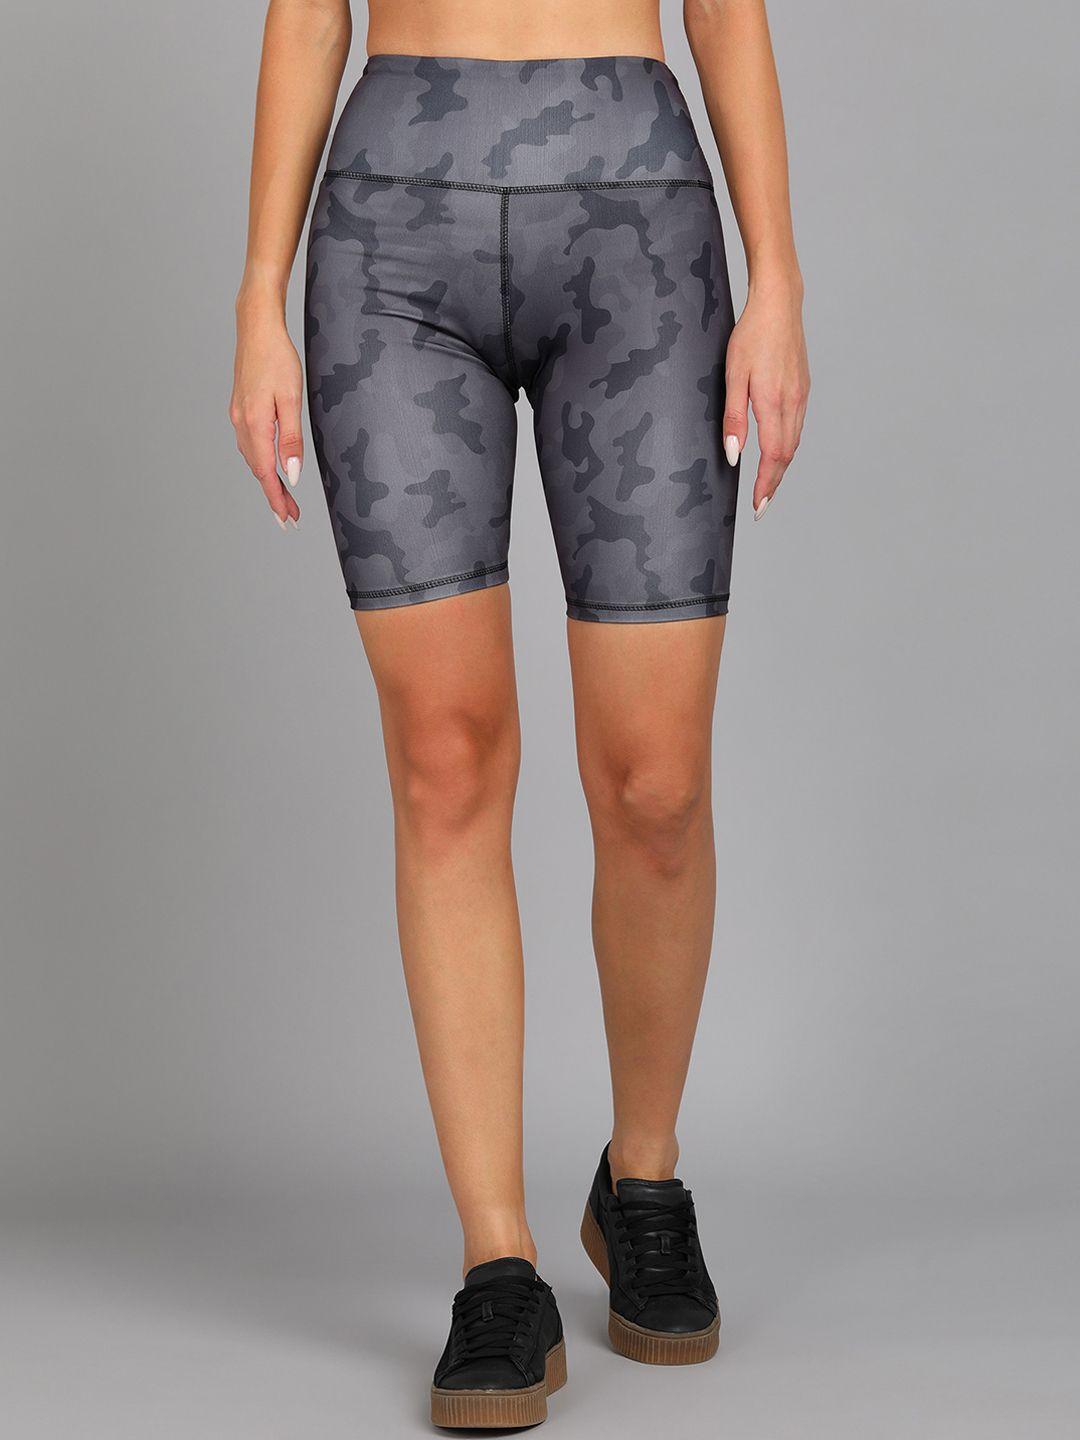 rock-paper-scissors-women-black-&-grey-camouflage-printed-rapid-dry-high-waist-tights